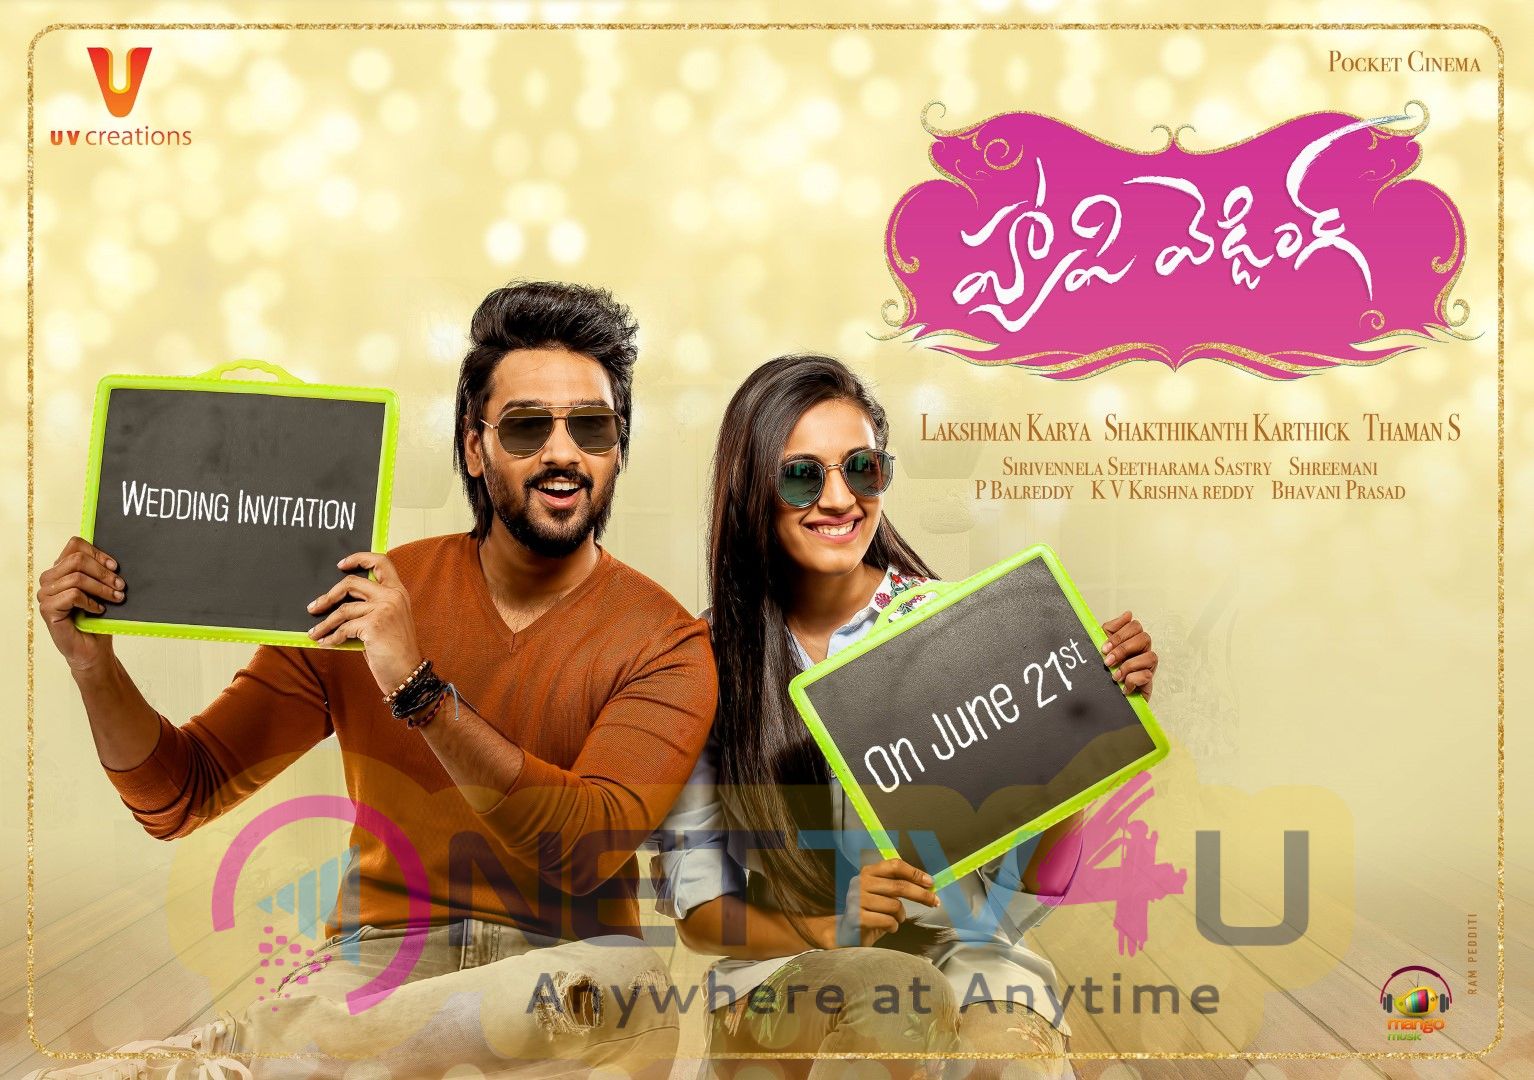 Pocket Movie Happy Wedding  Invitation Stunning Poster Look Image Telugu Gallery